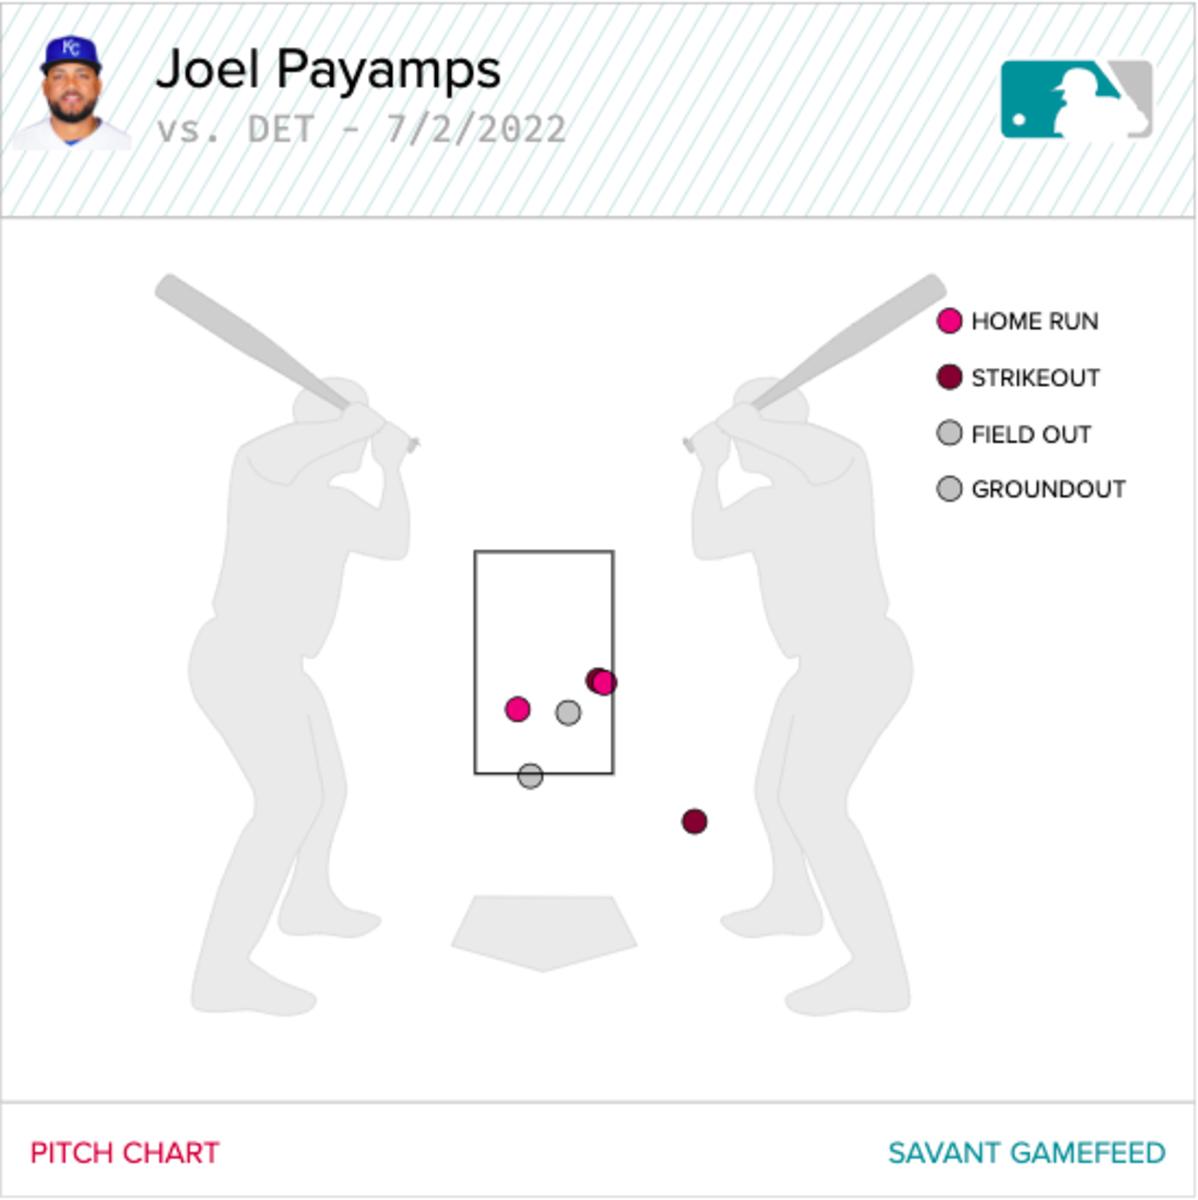 Joel Payamps' pitch chart, via Baseball Savant.